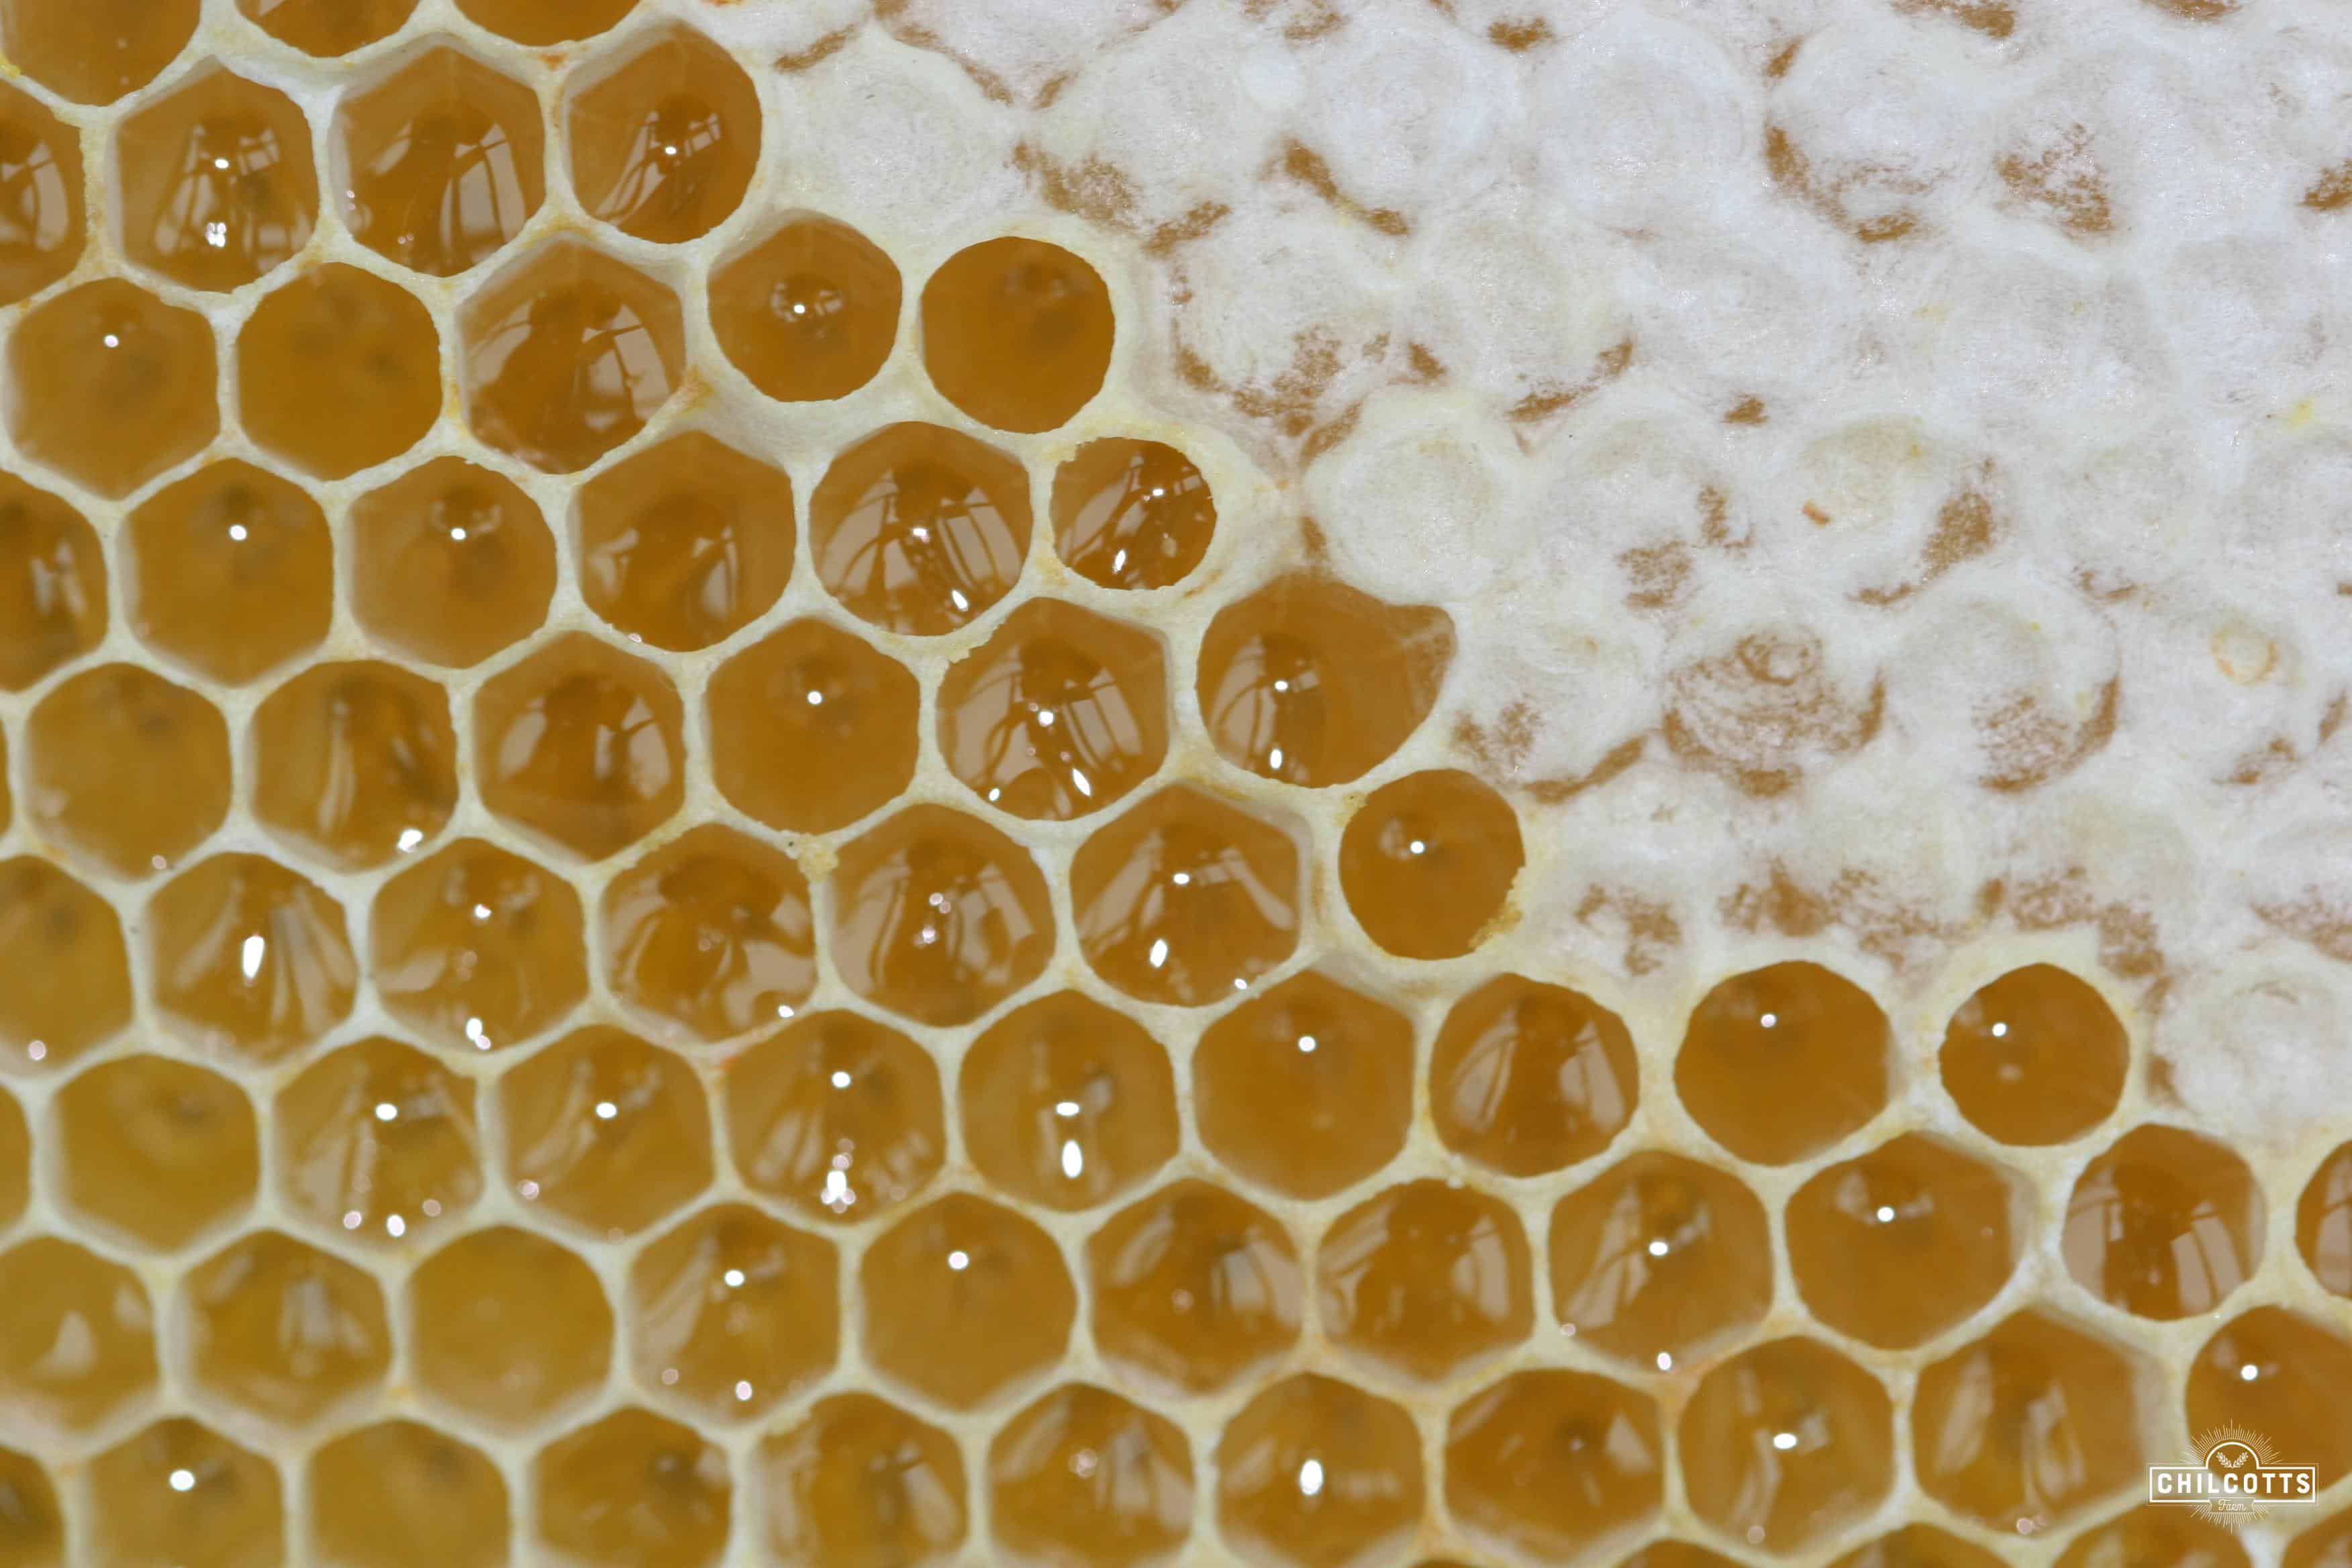 Chilcotts Farm Honeycomb - made by bees in Barnstaple Devon